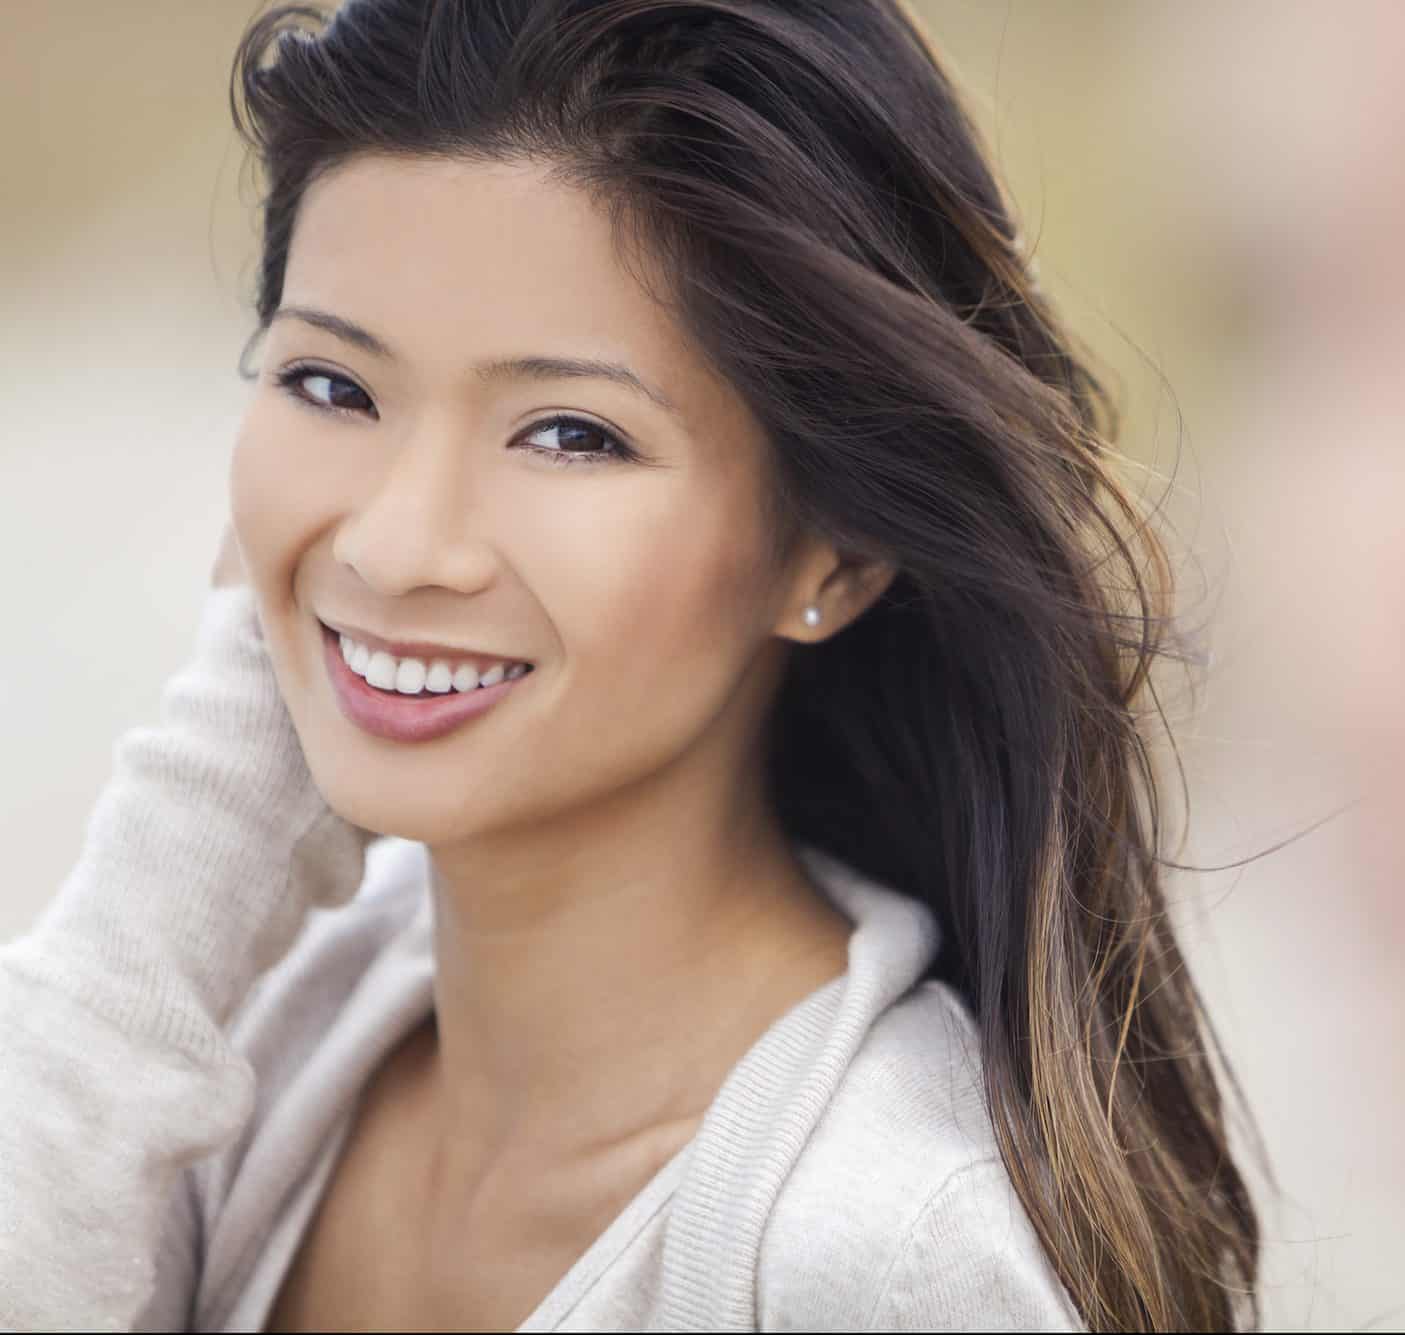 An Asian woman smiling 